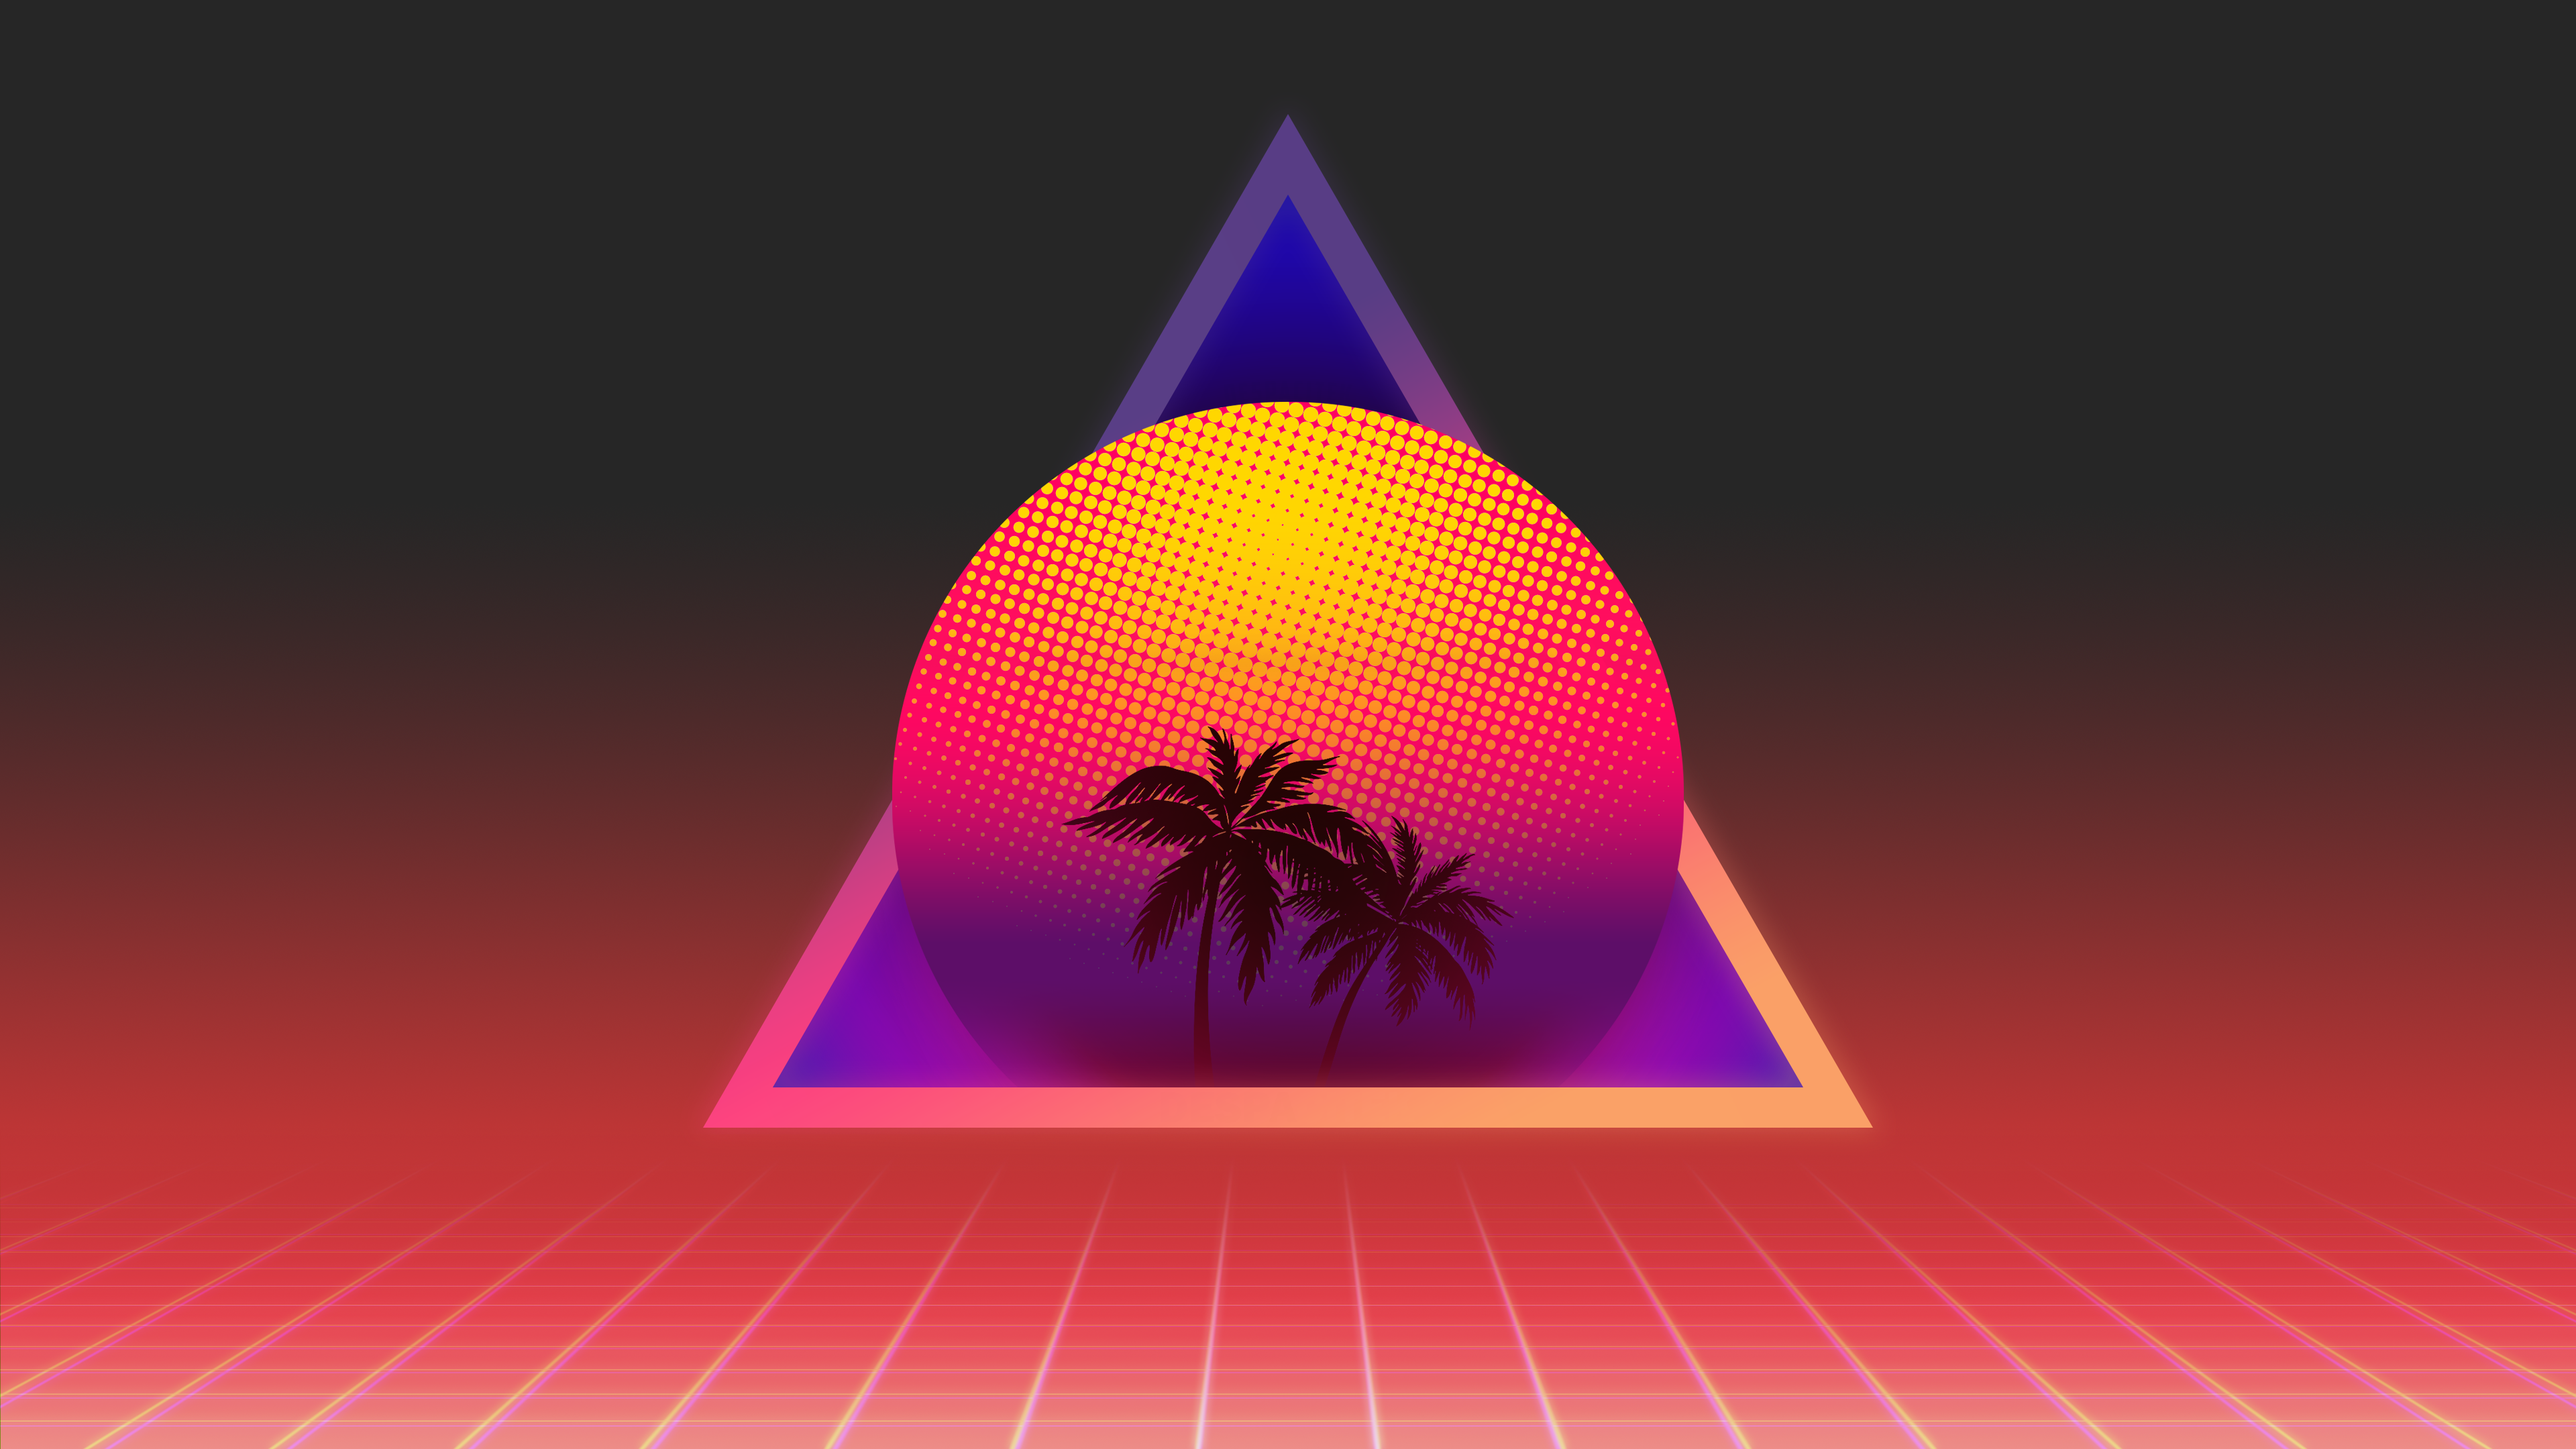 General 3840x2160 synthwave OutRun vaporwave retrowave sunset palm trees digital art